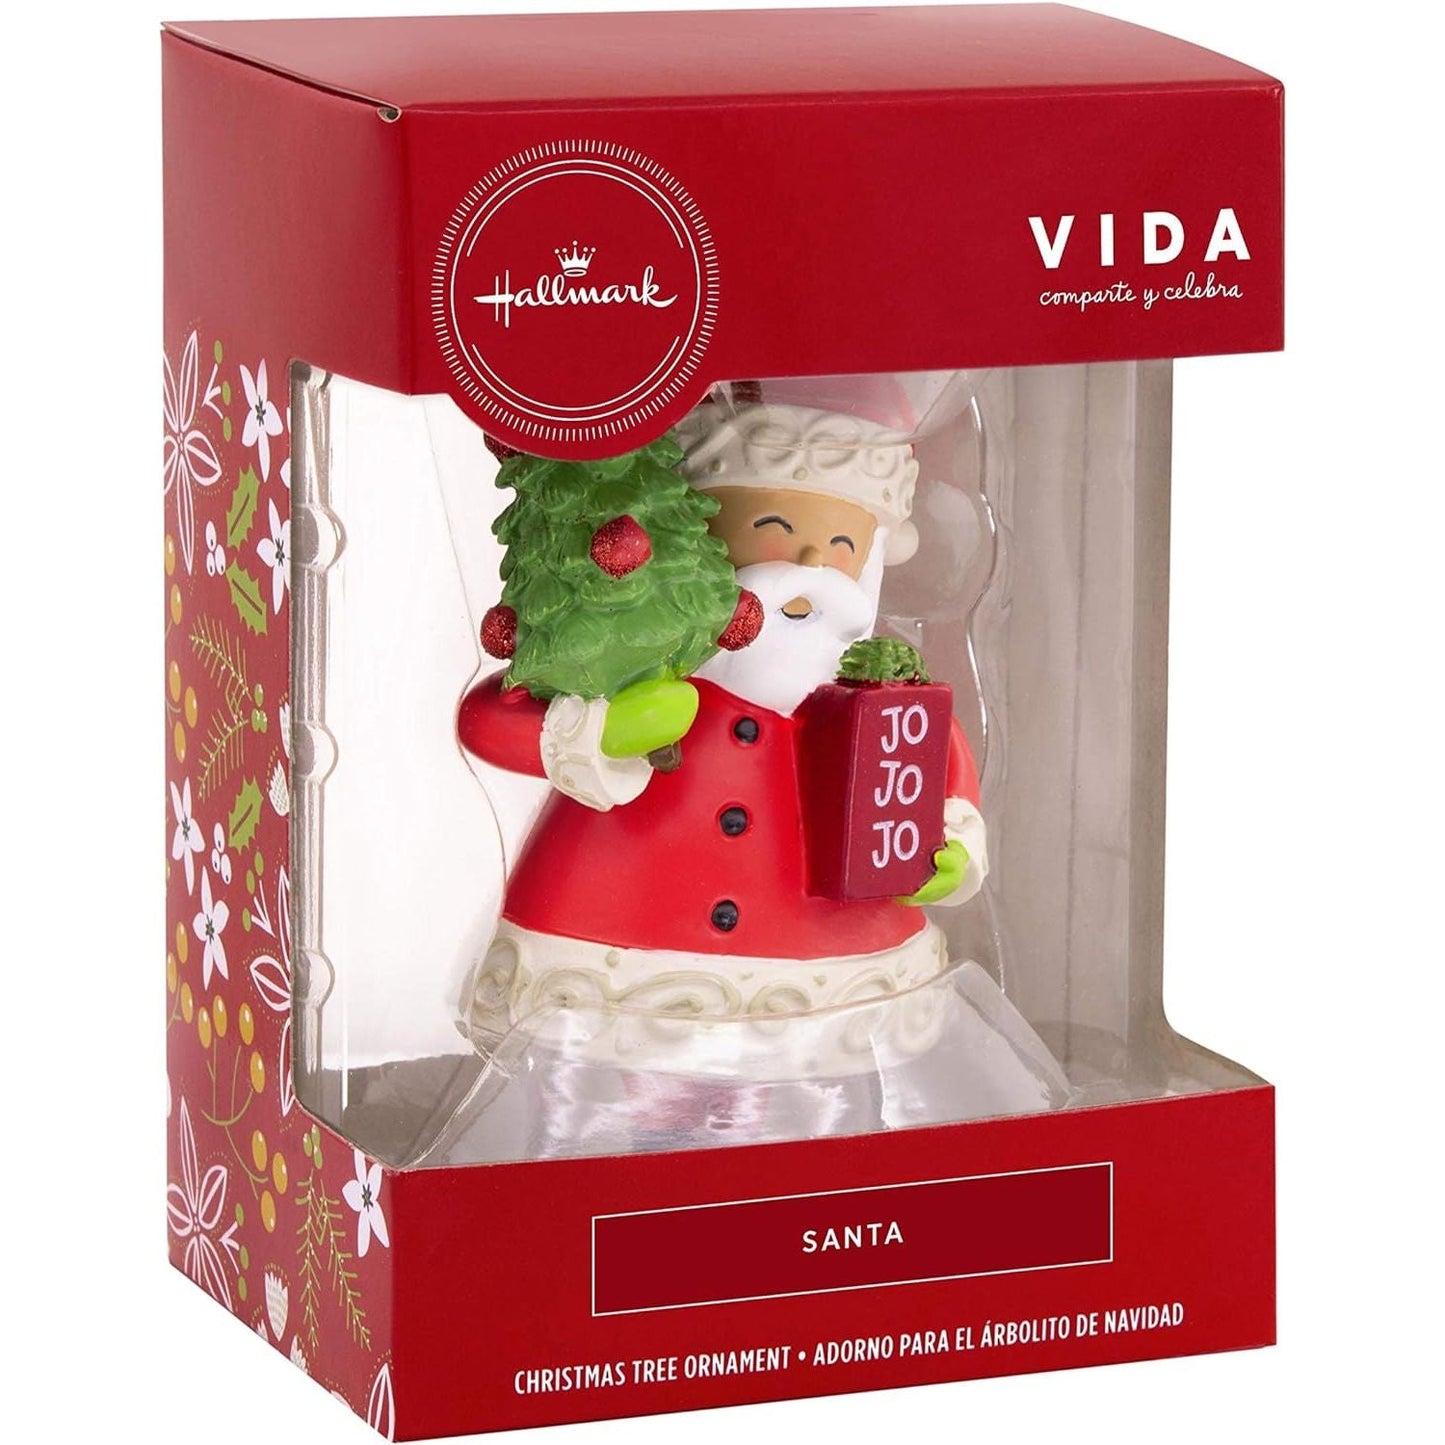 VIDA Santa With Tree Hallmark Ornament